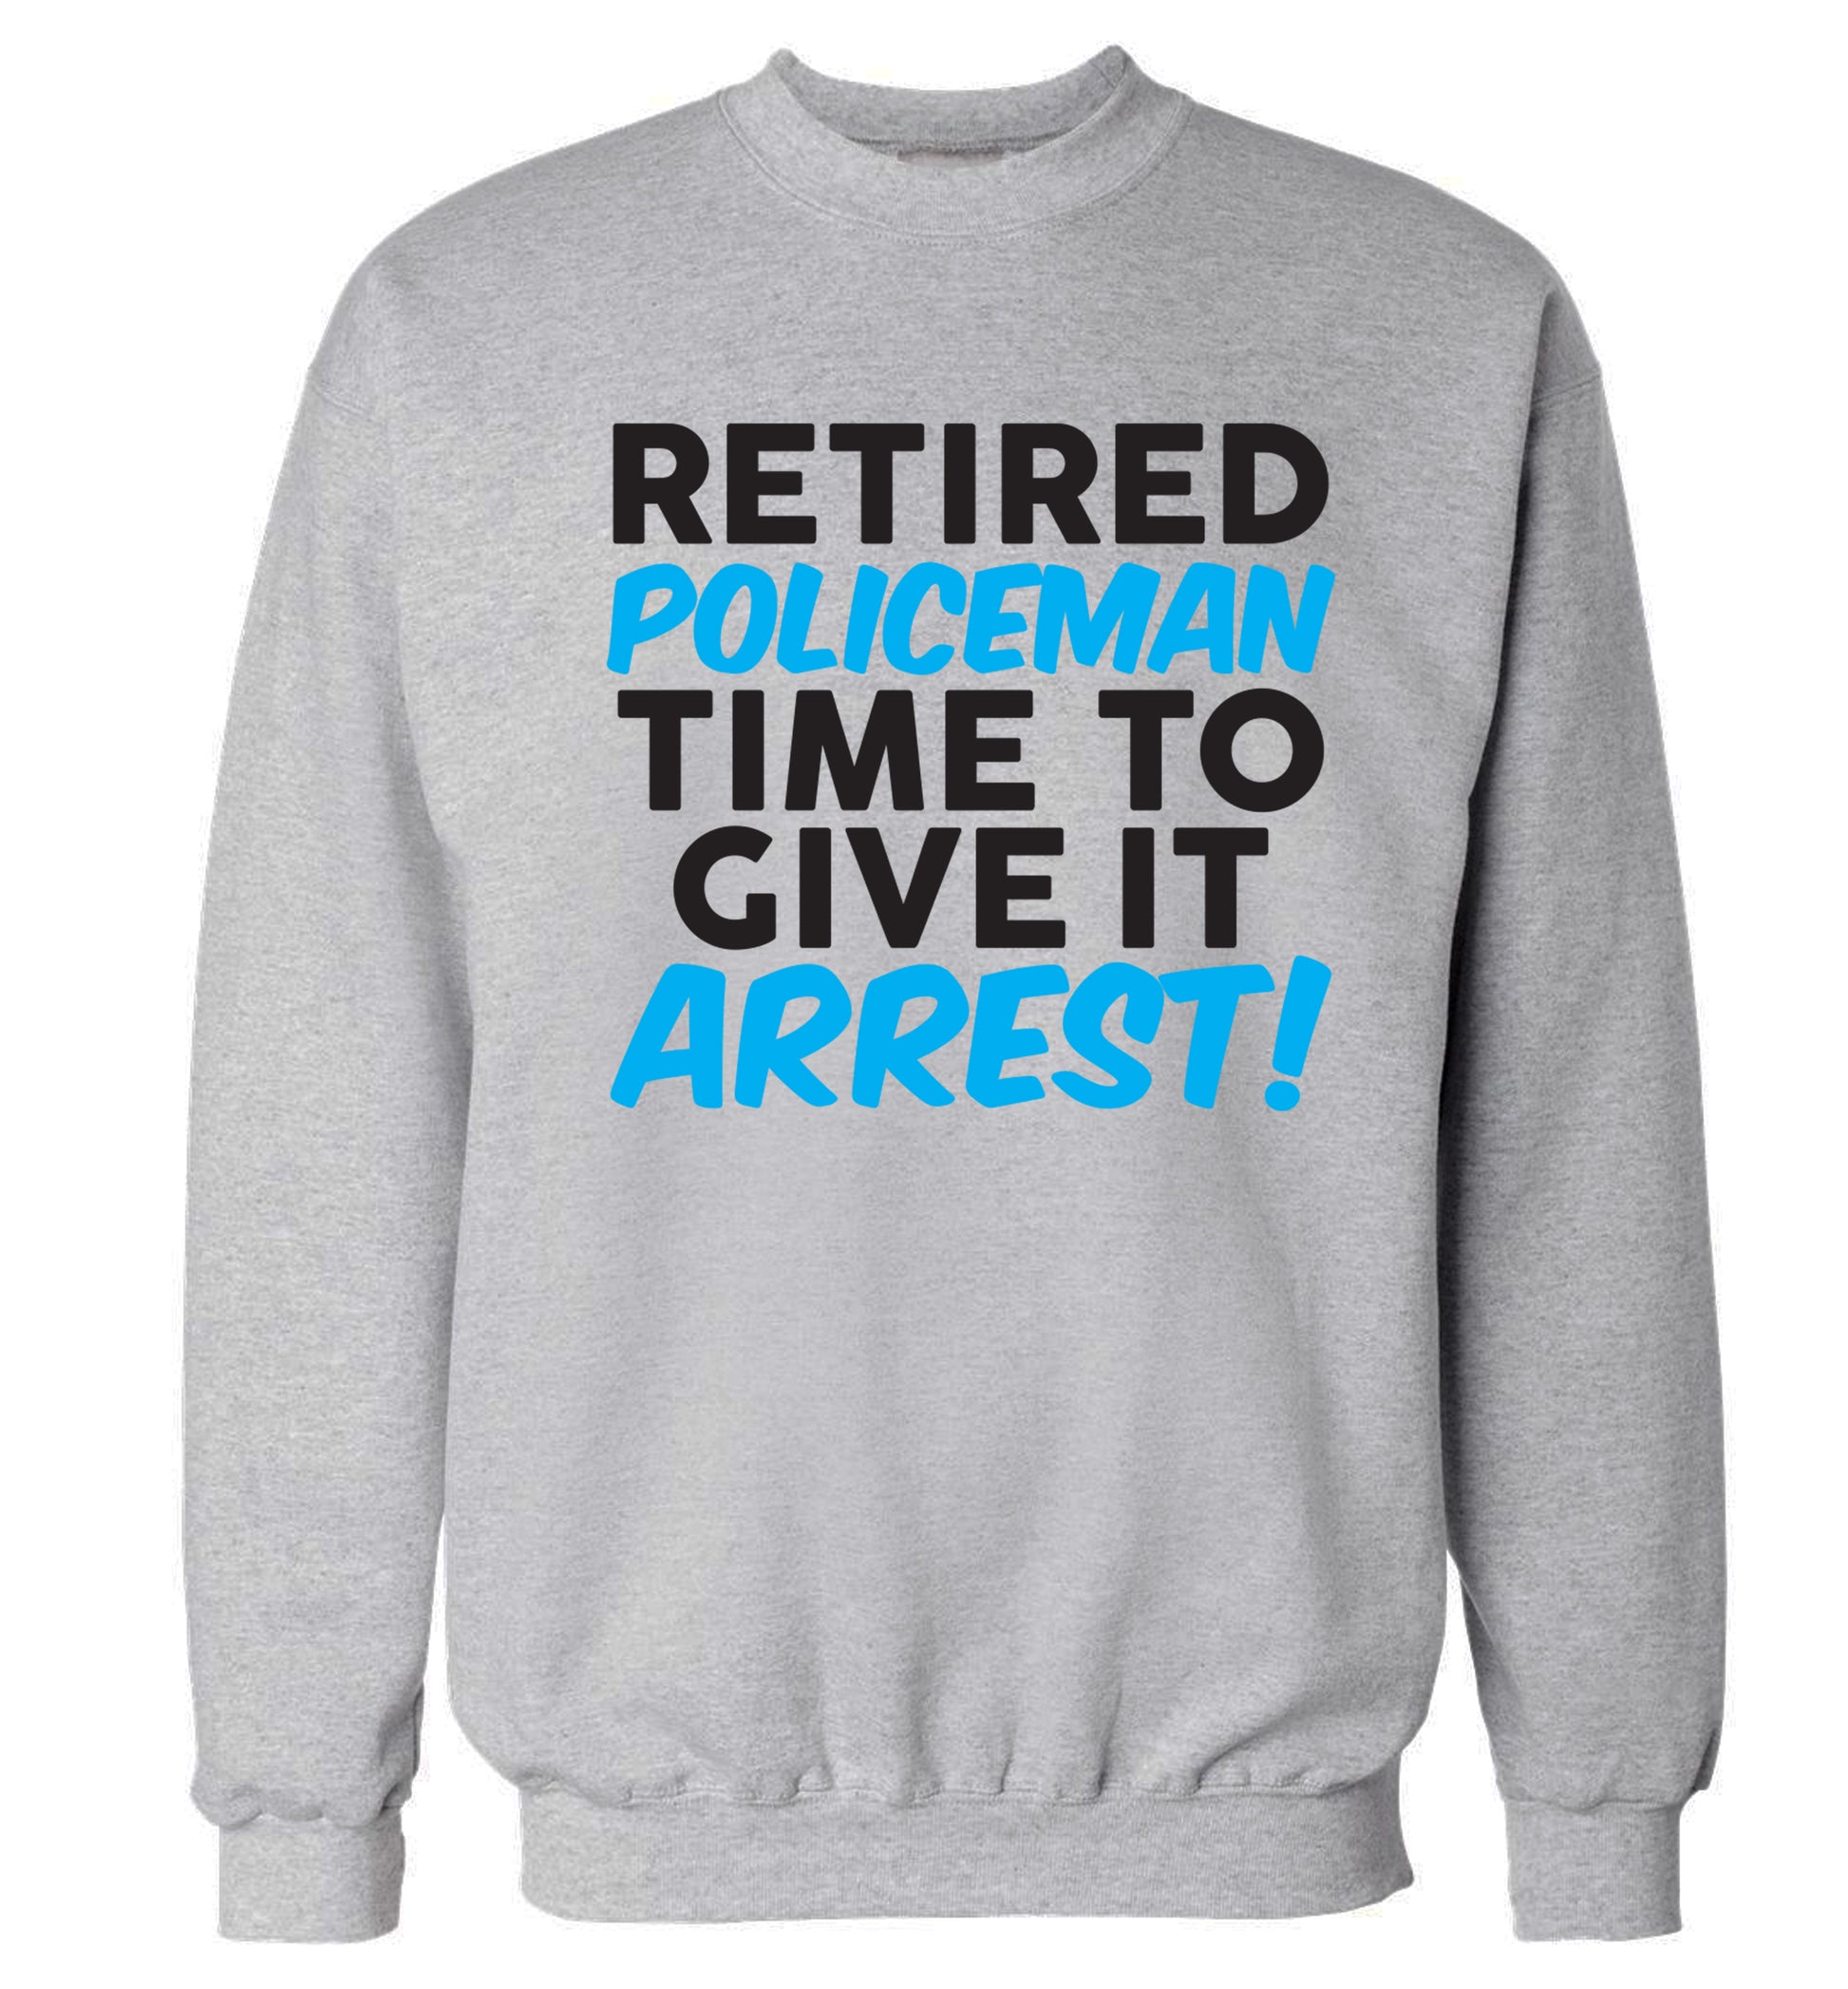 Retired policeman give it arresst! Adult's unisex grey Sweater 2XL